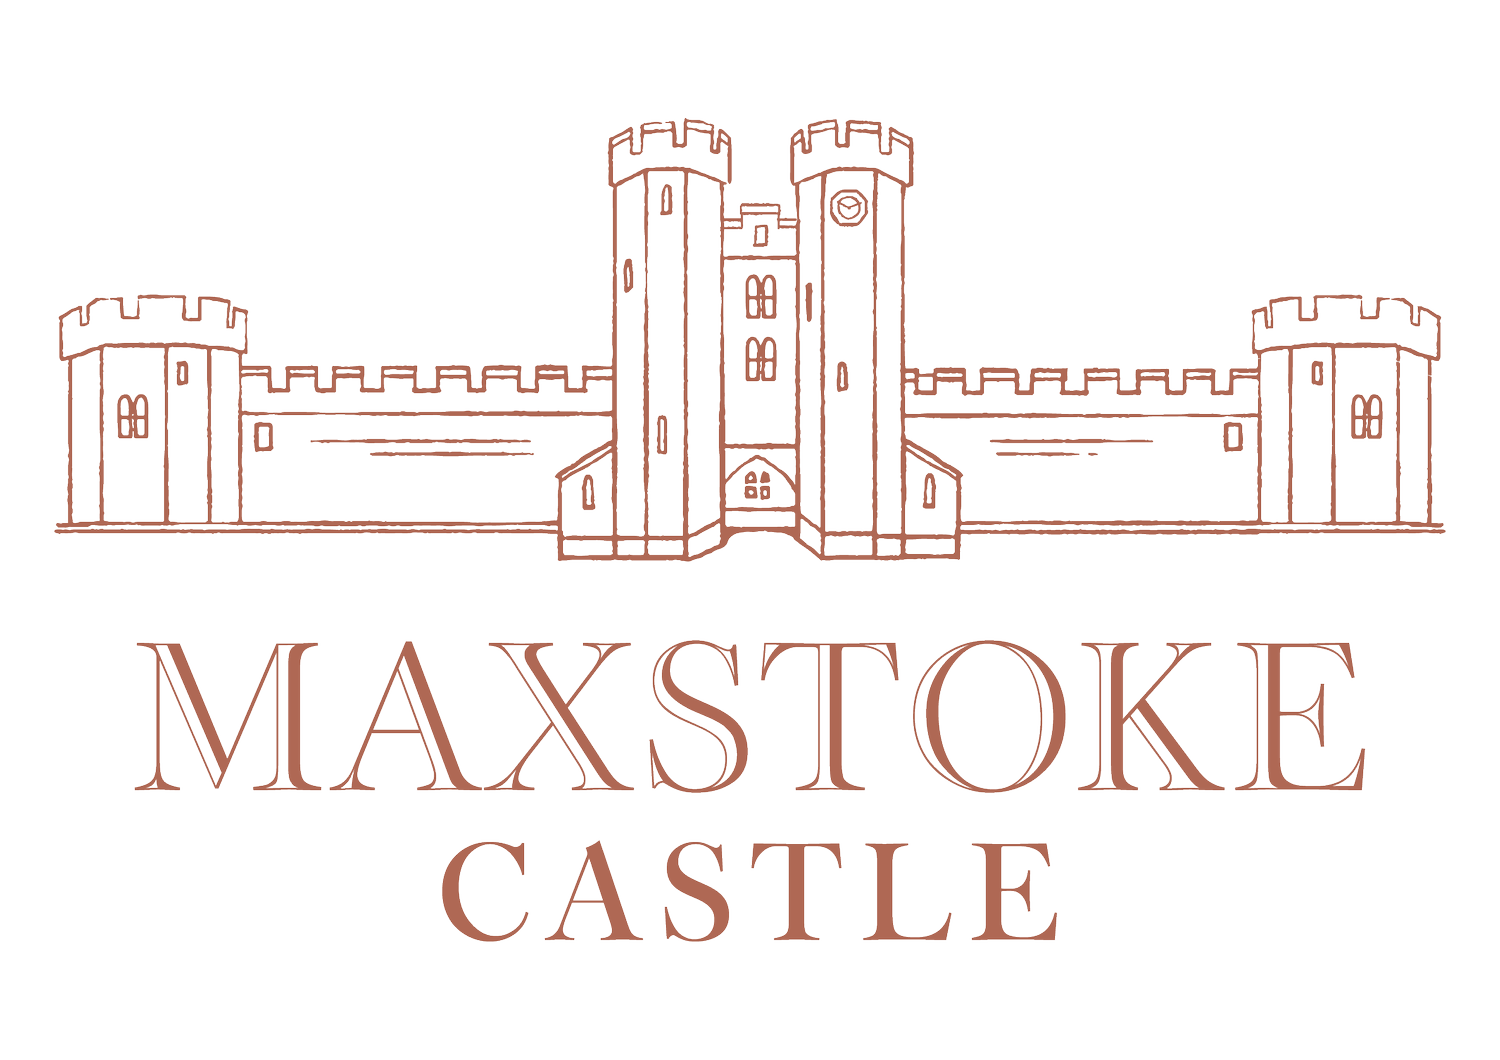 Maxstoke Castle